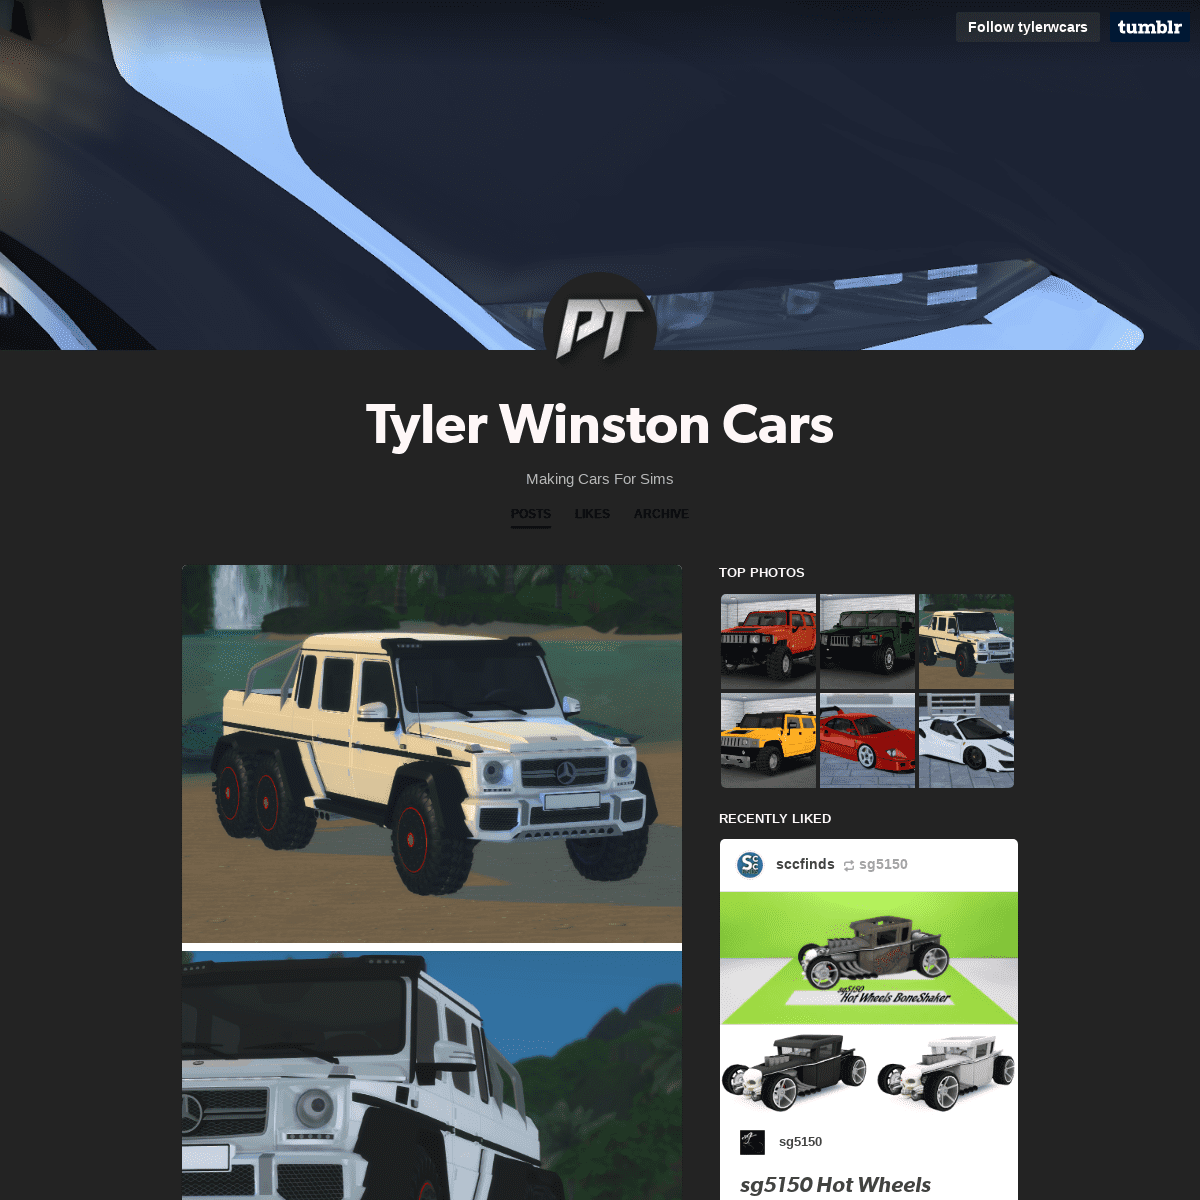 Tyler Winston Cars